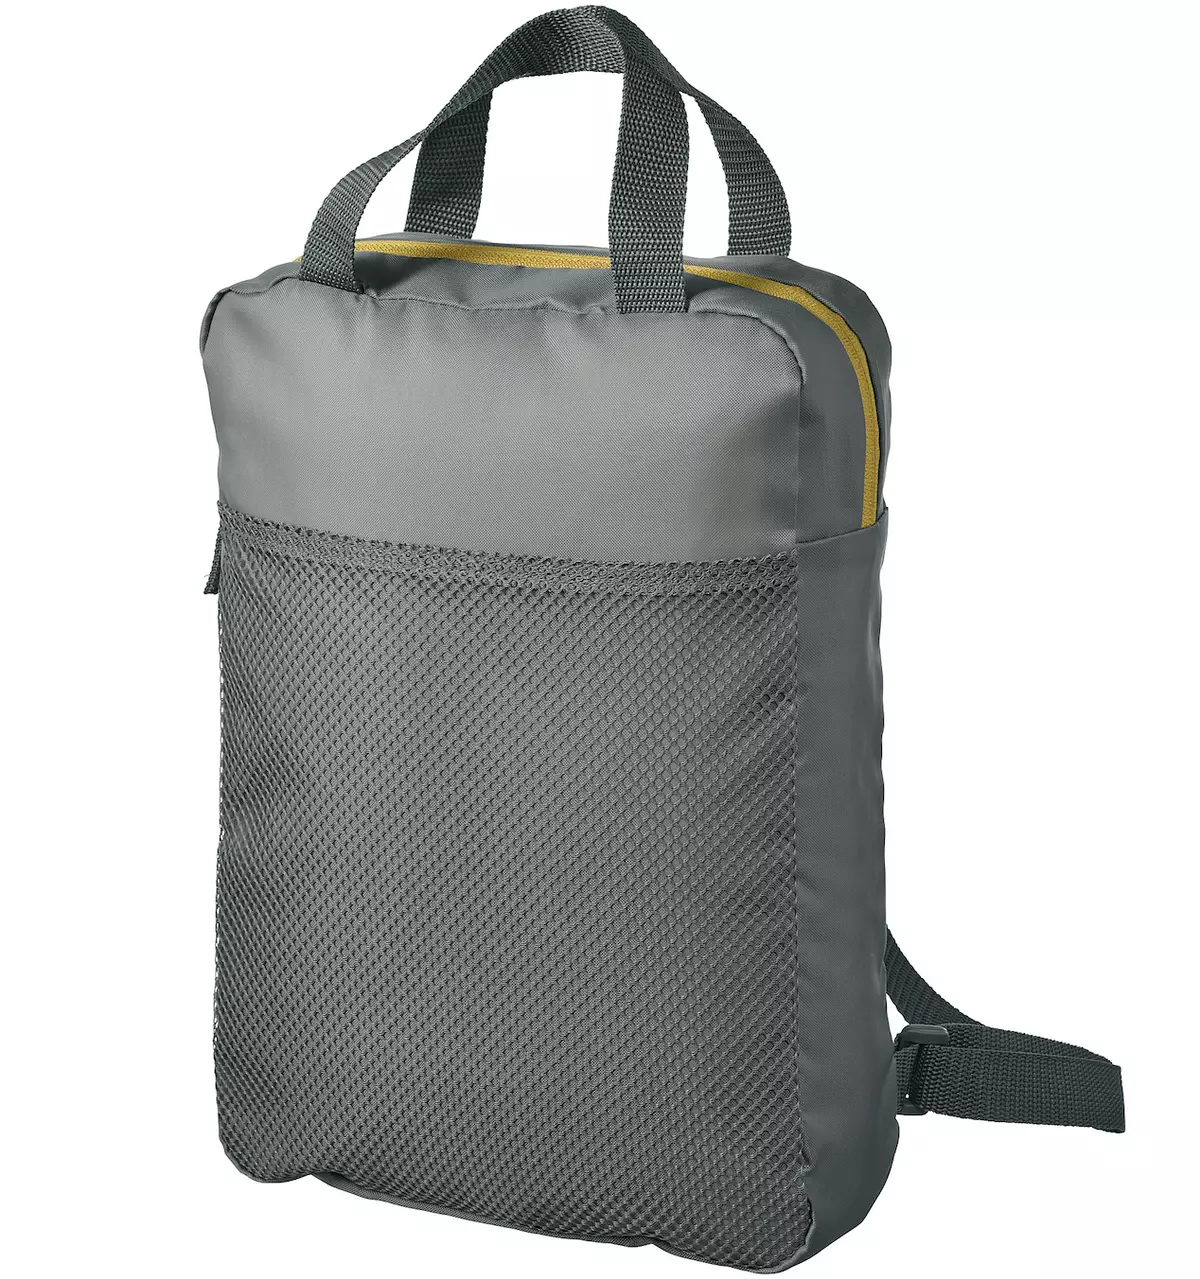 Ikea Backpacks: Incamake yikanzu yumukara-ivalisi ku ruziga nubundi moderi, uburyo bwo kwita 15421_22